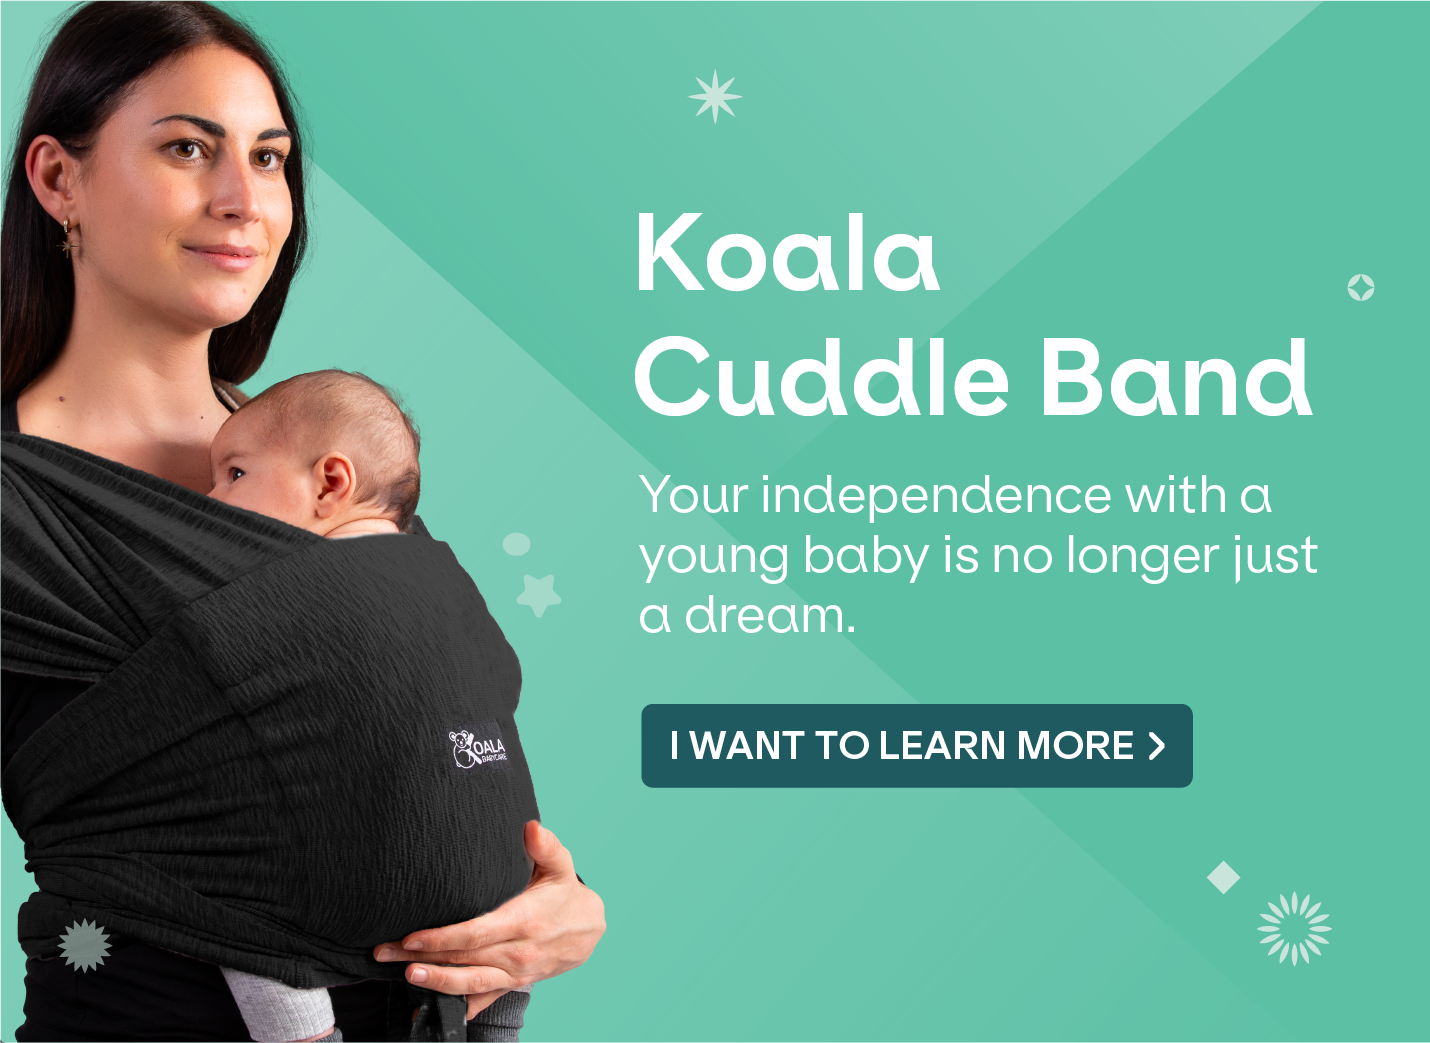 How to do Tummy Time with your baby - Koala Babycare – Koalababycare